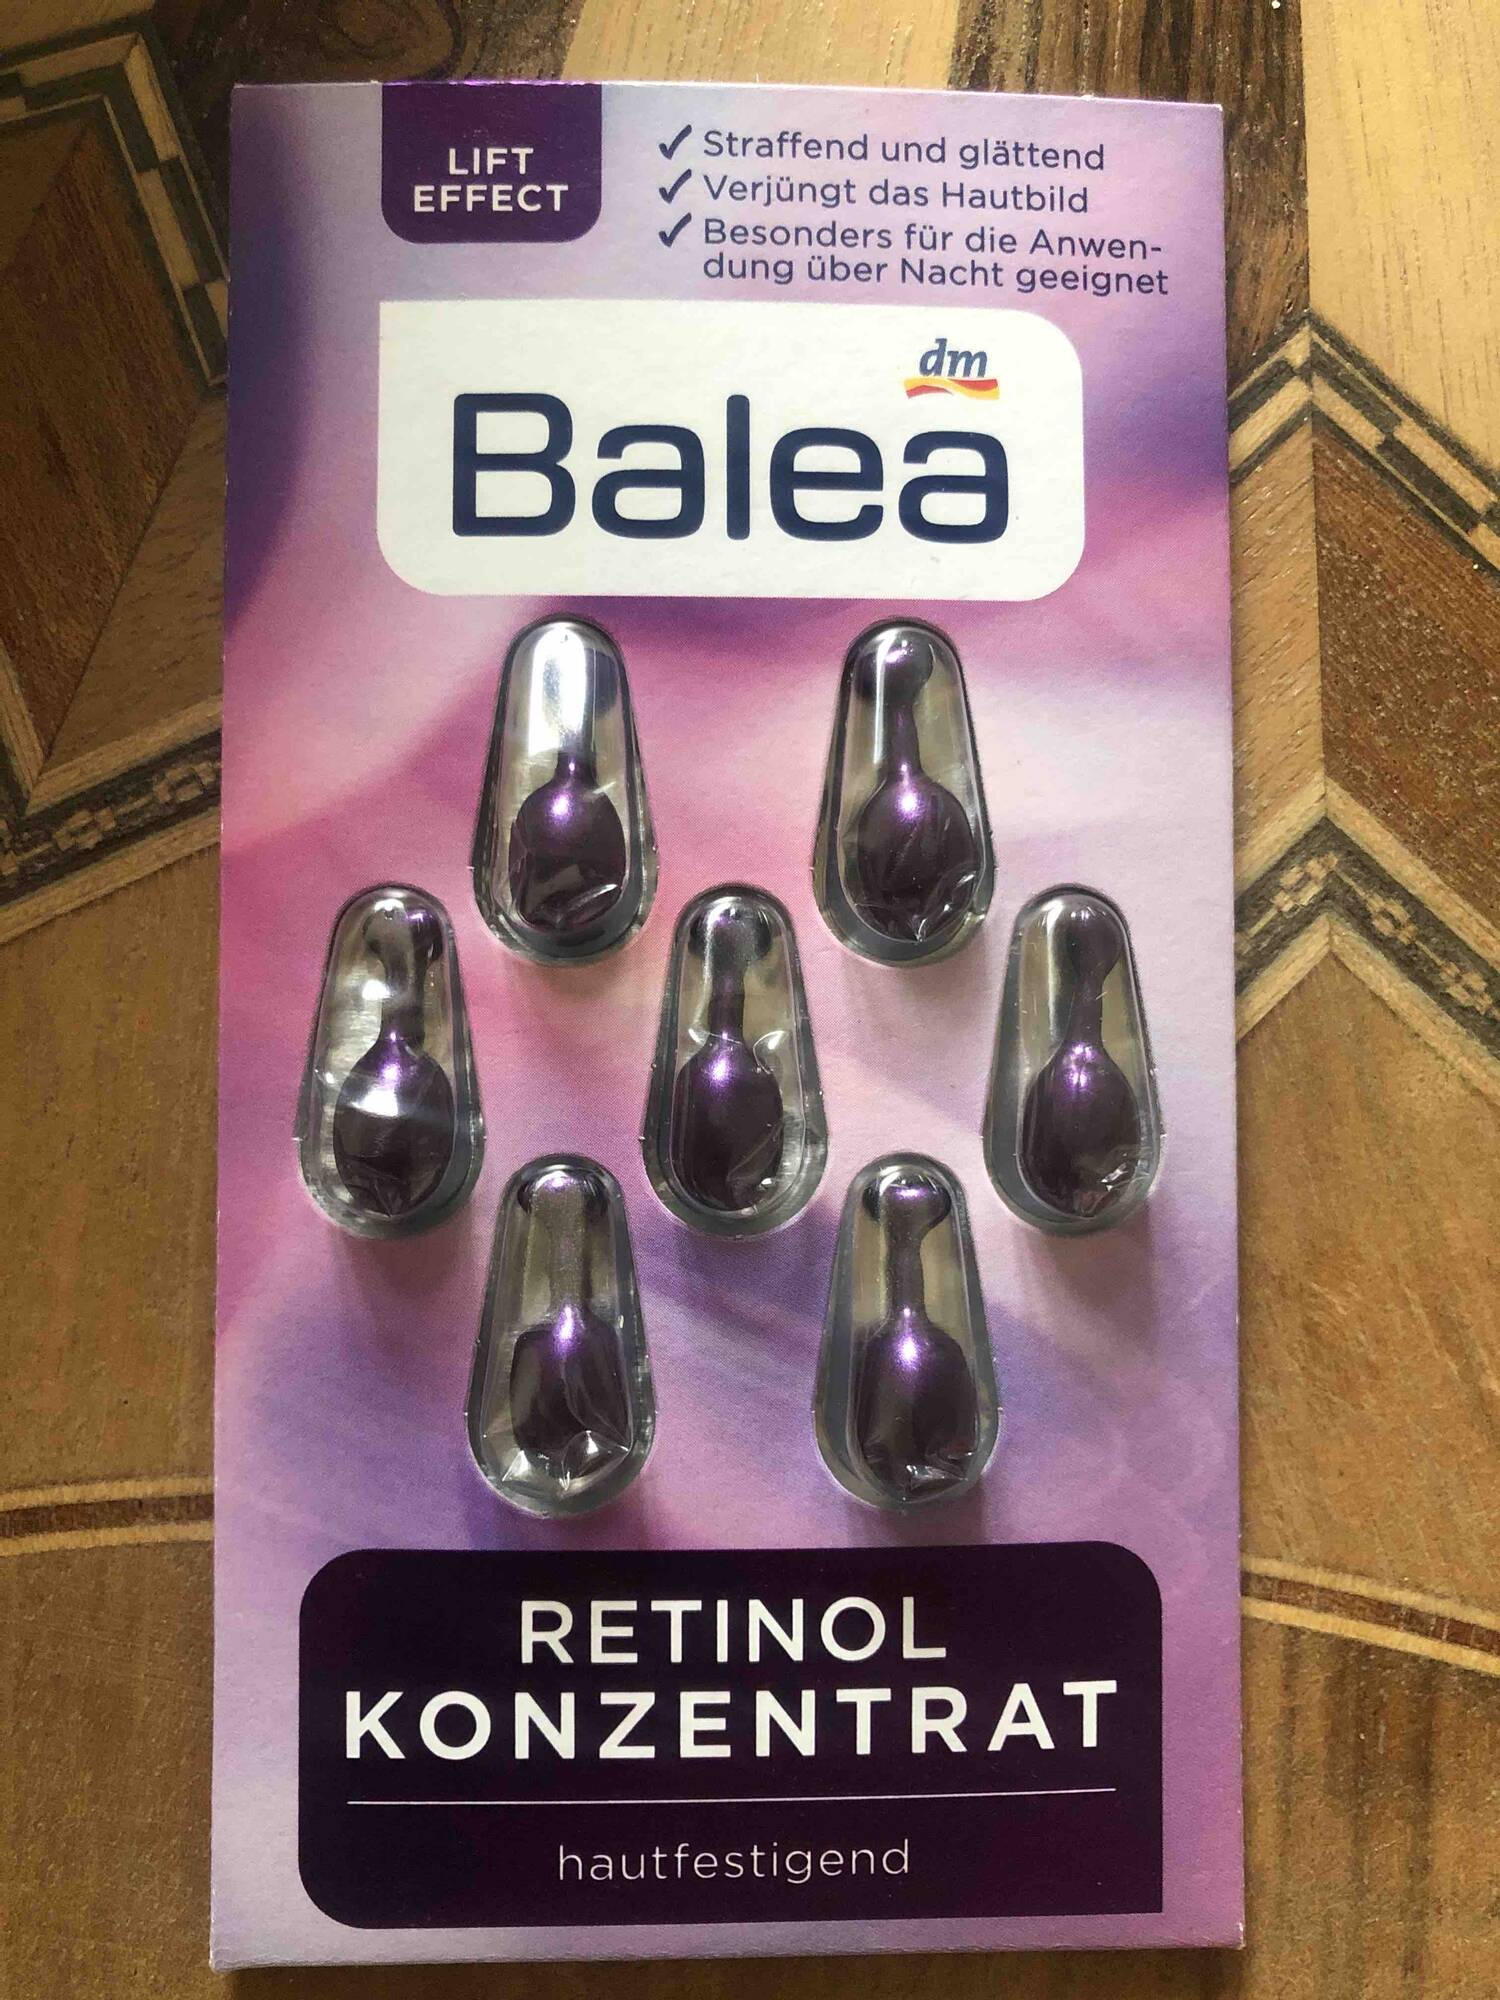 BALEA - Retinol konzentrat